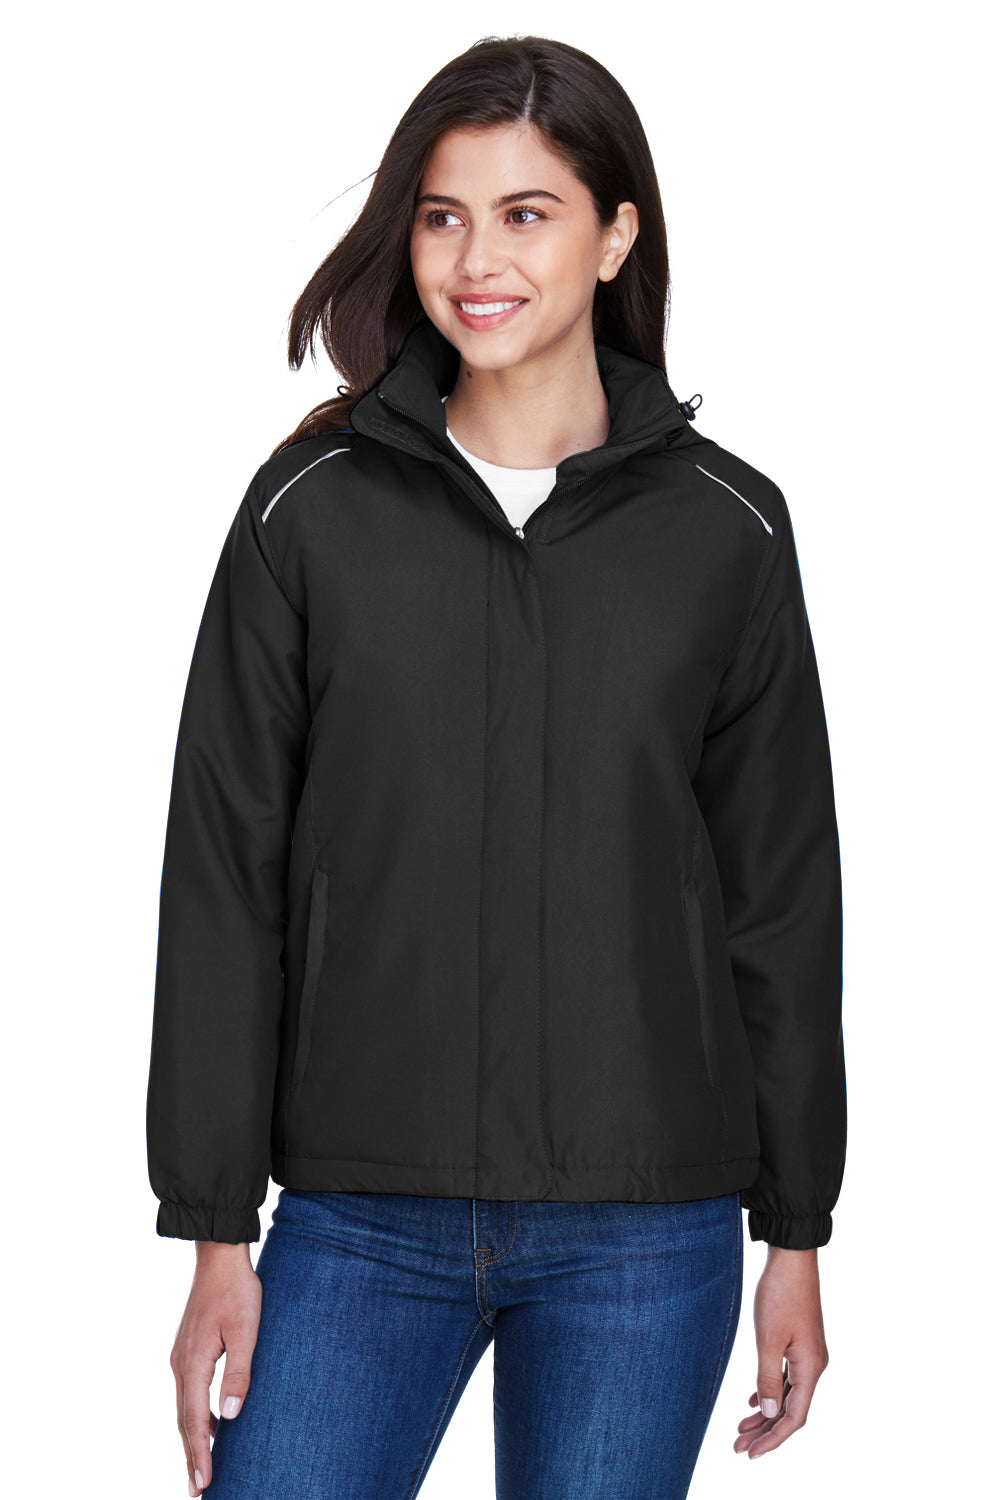 Core 365 78189 Womens Brisk Full Zip Hooded Jacket Black Front